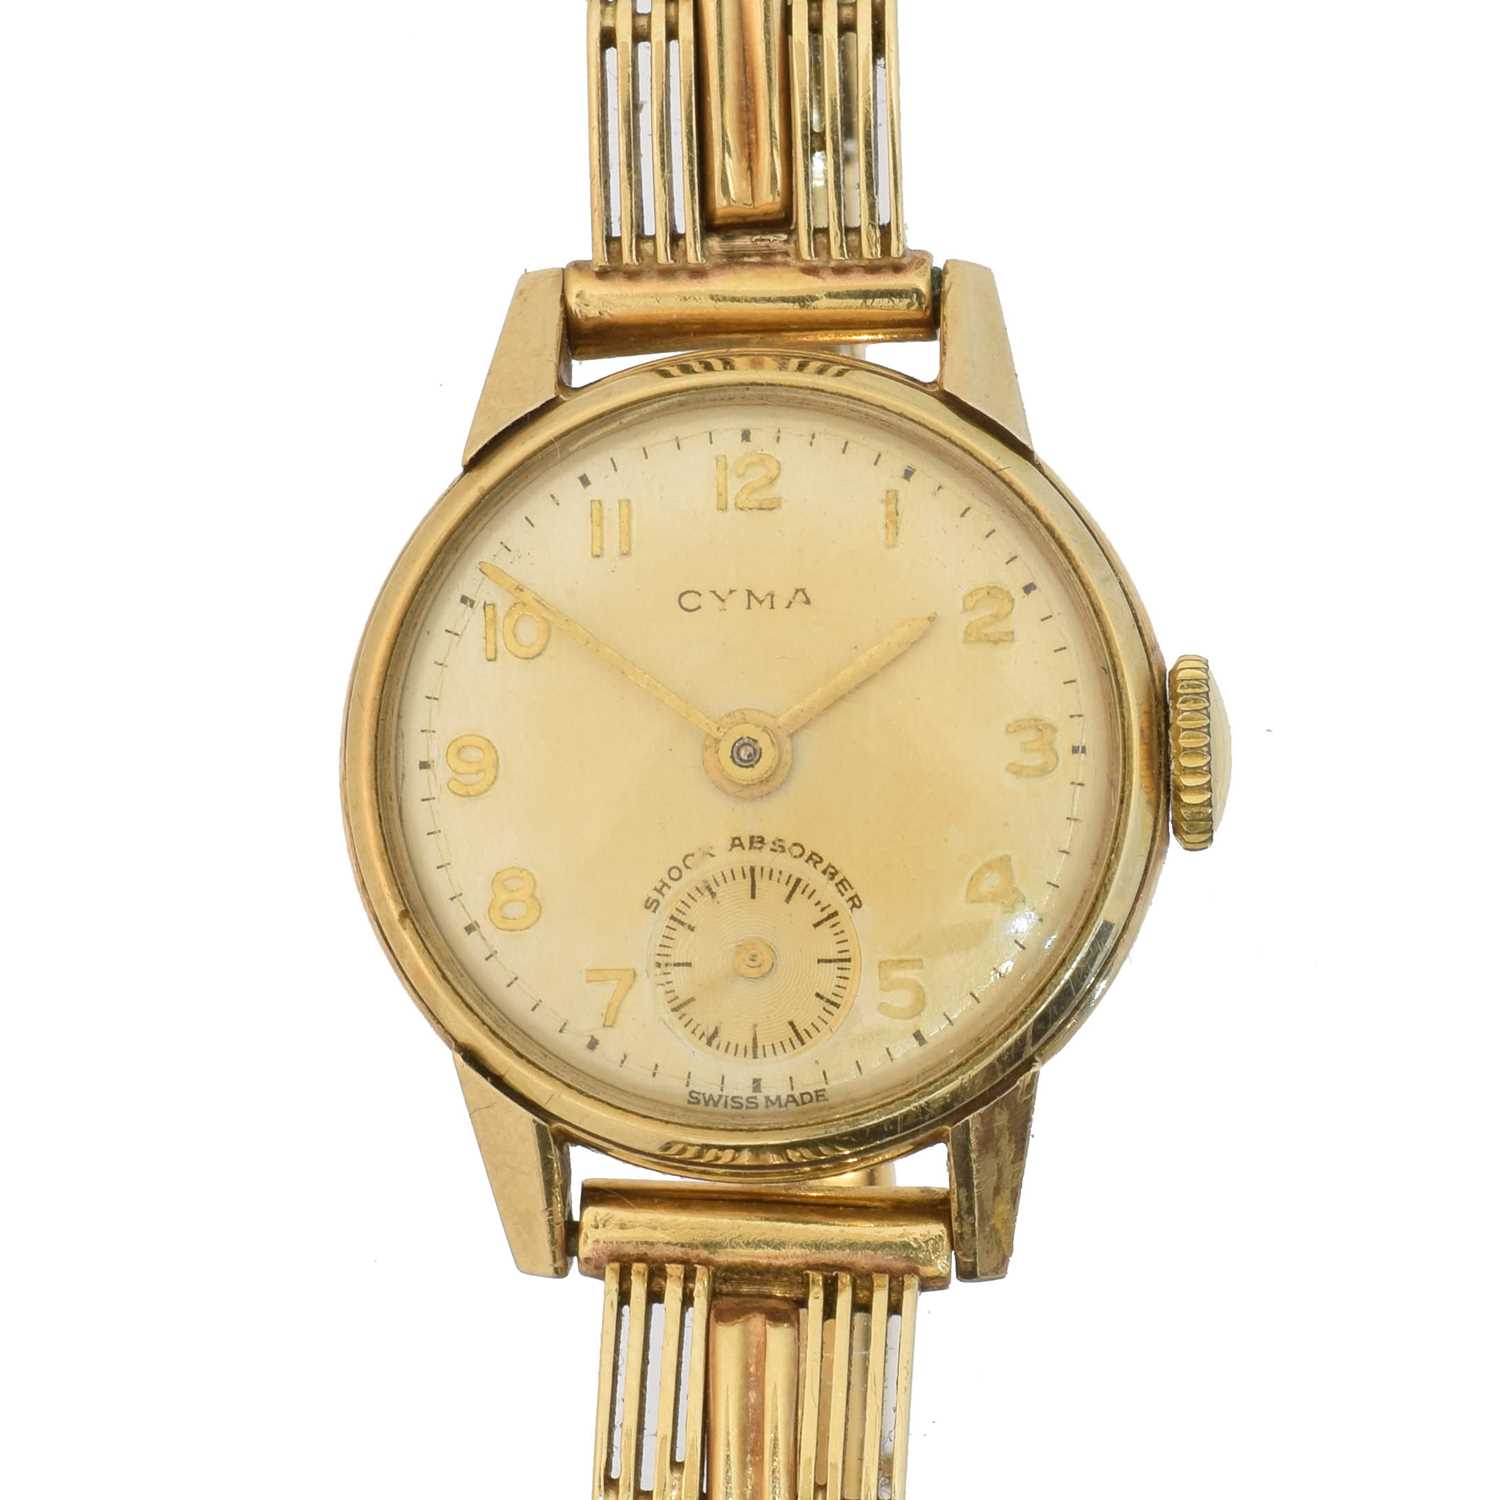 85 - A 9ct gold Cyma manual wind ladies wristwatch,